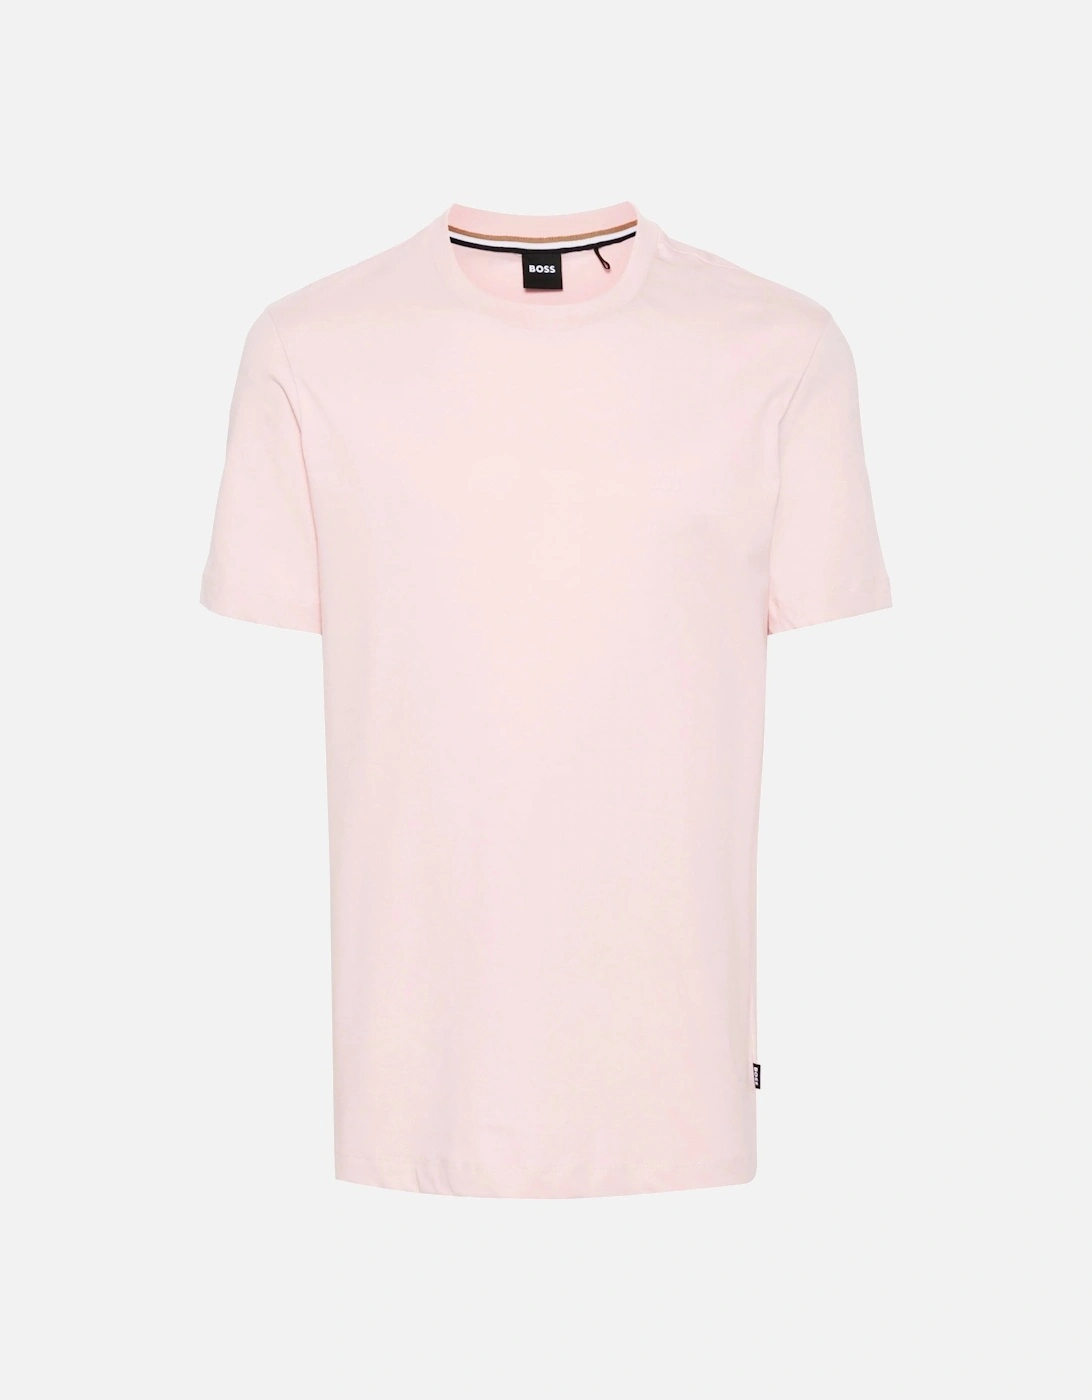 Thompson 01 T-shirt Pink, 9 of 8